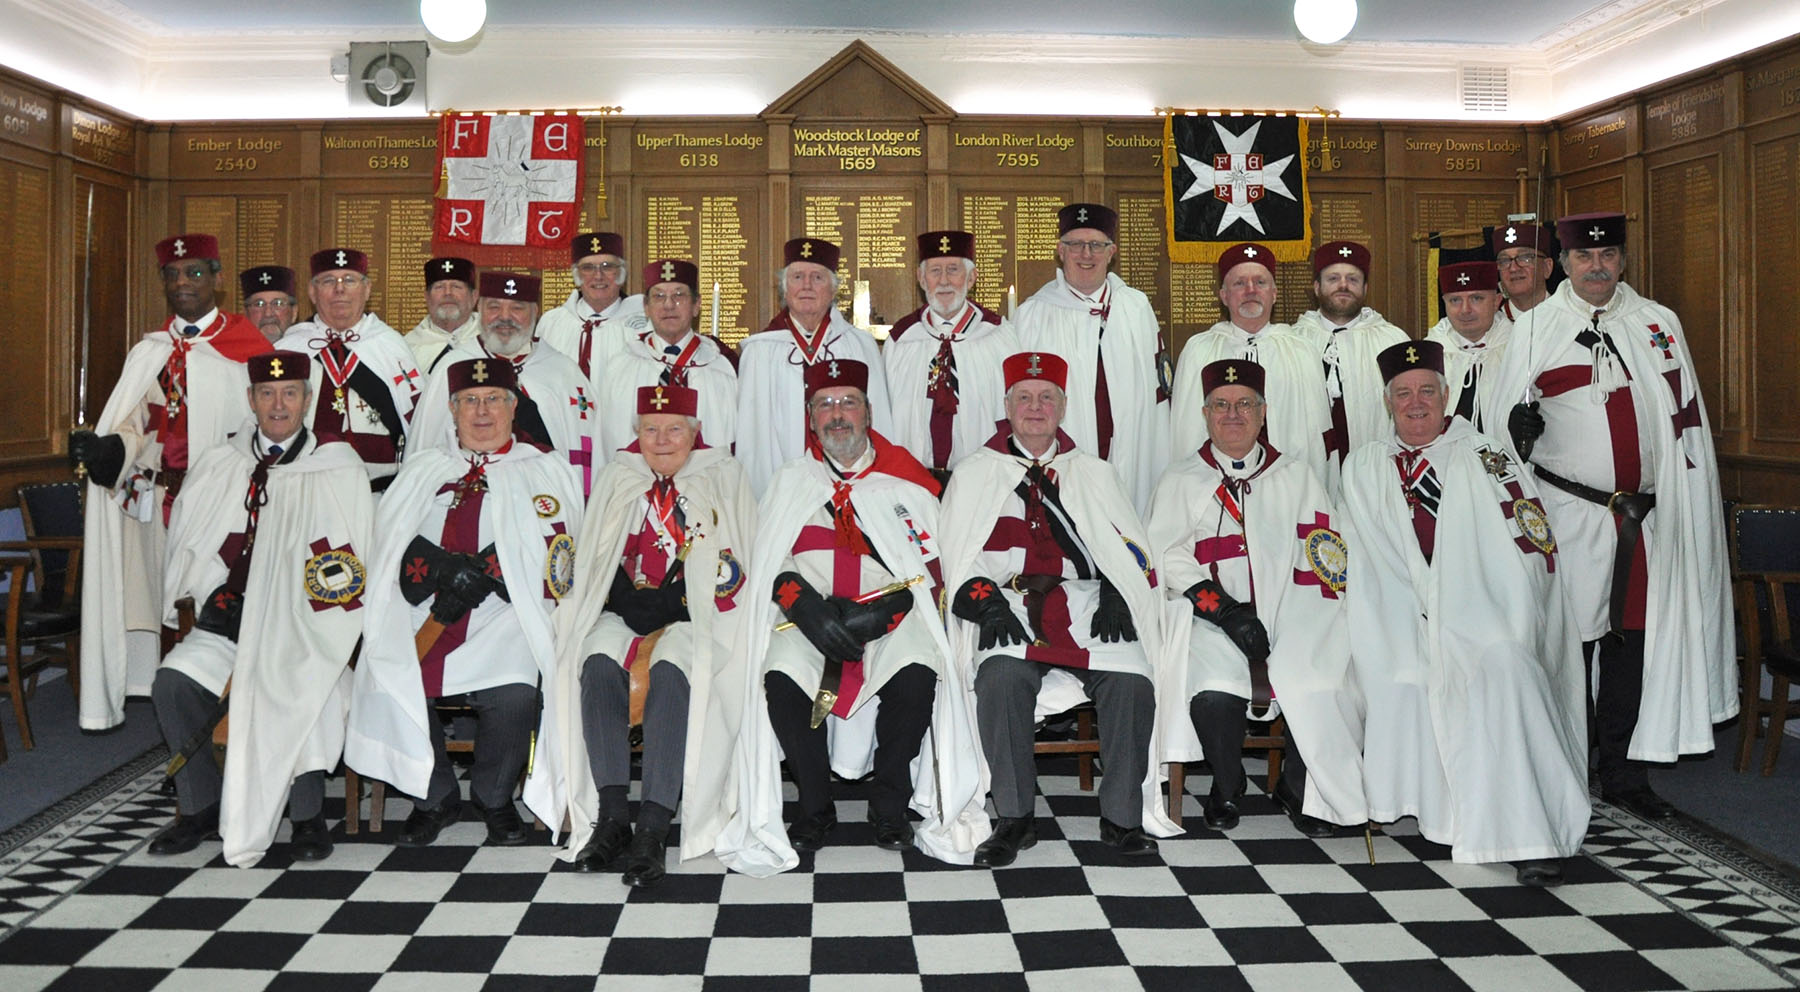 Praesidium Legati Preceptory installs four Knights of Malta